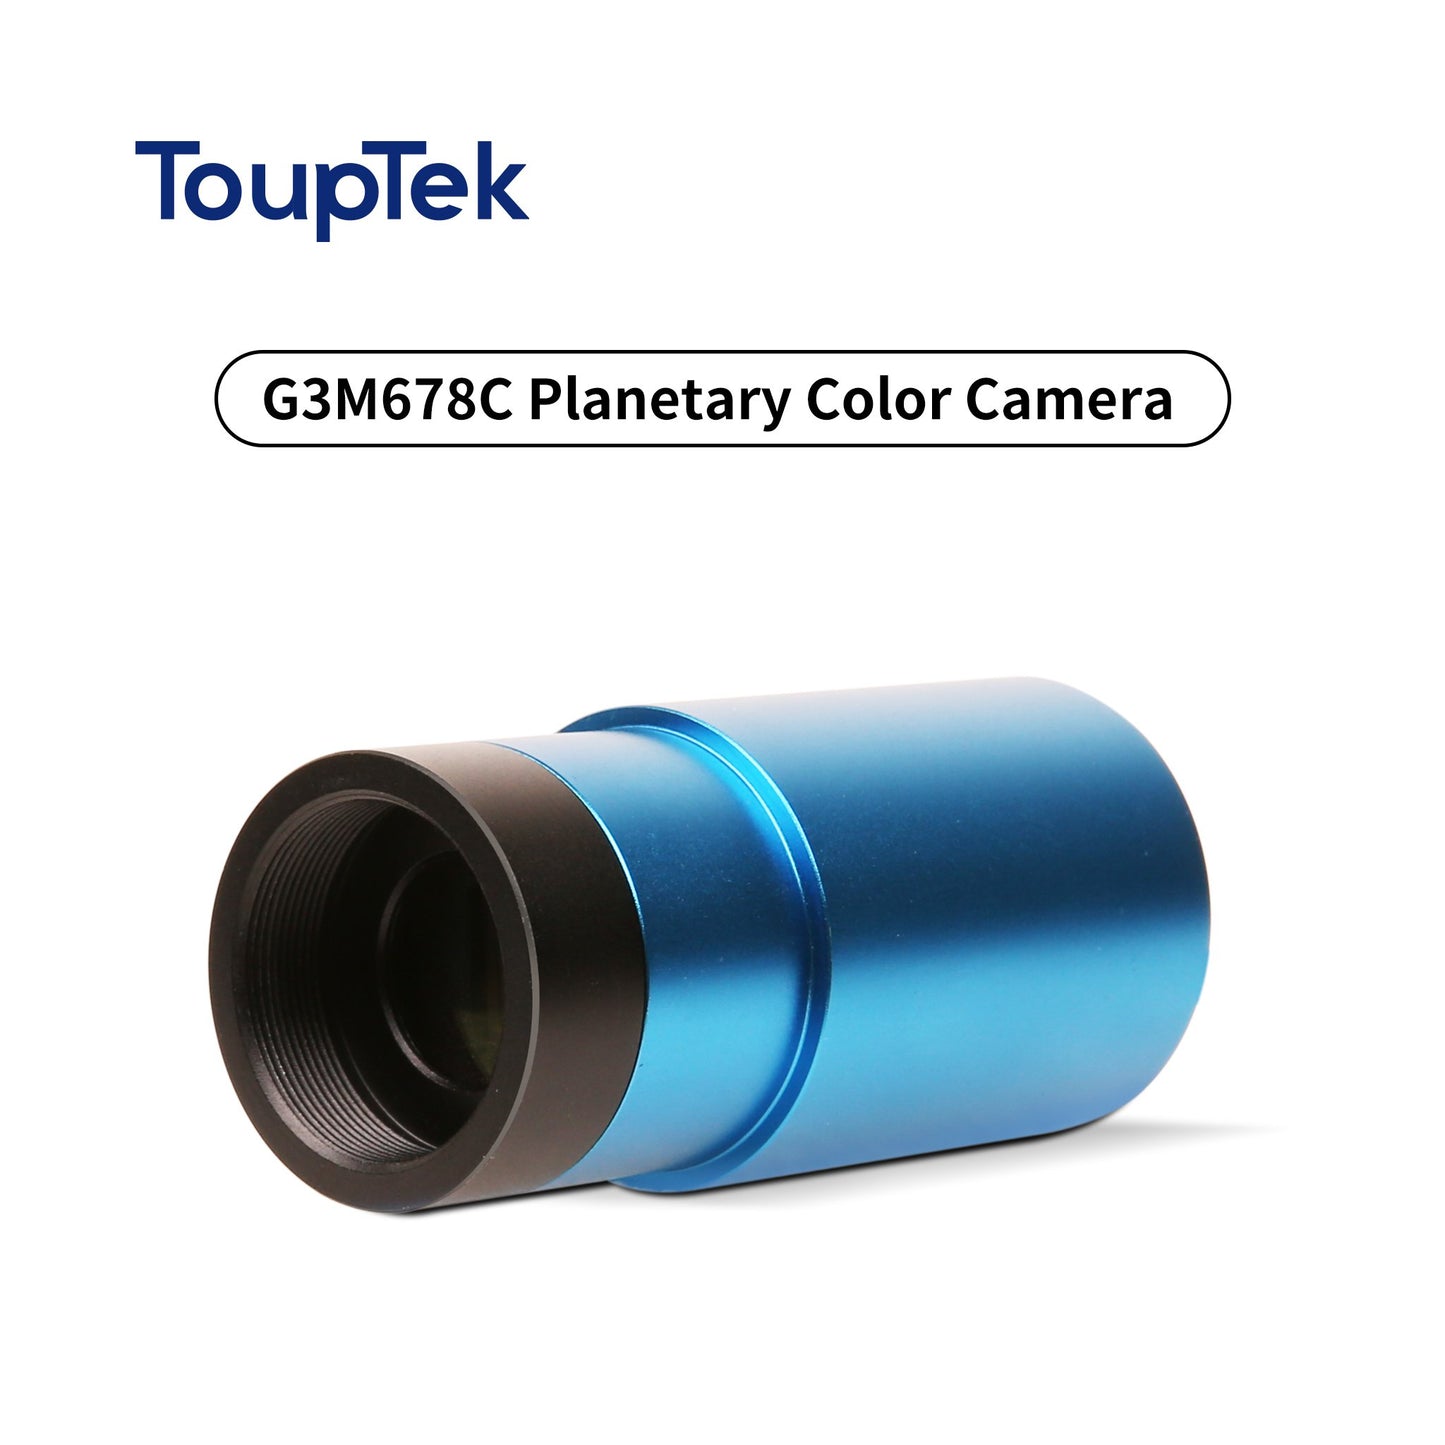 G3M678C Planetary Color Camera